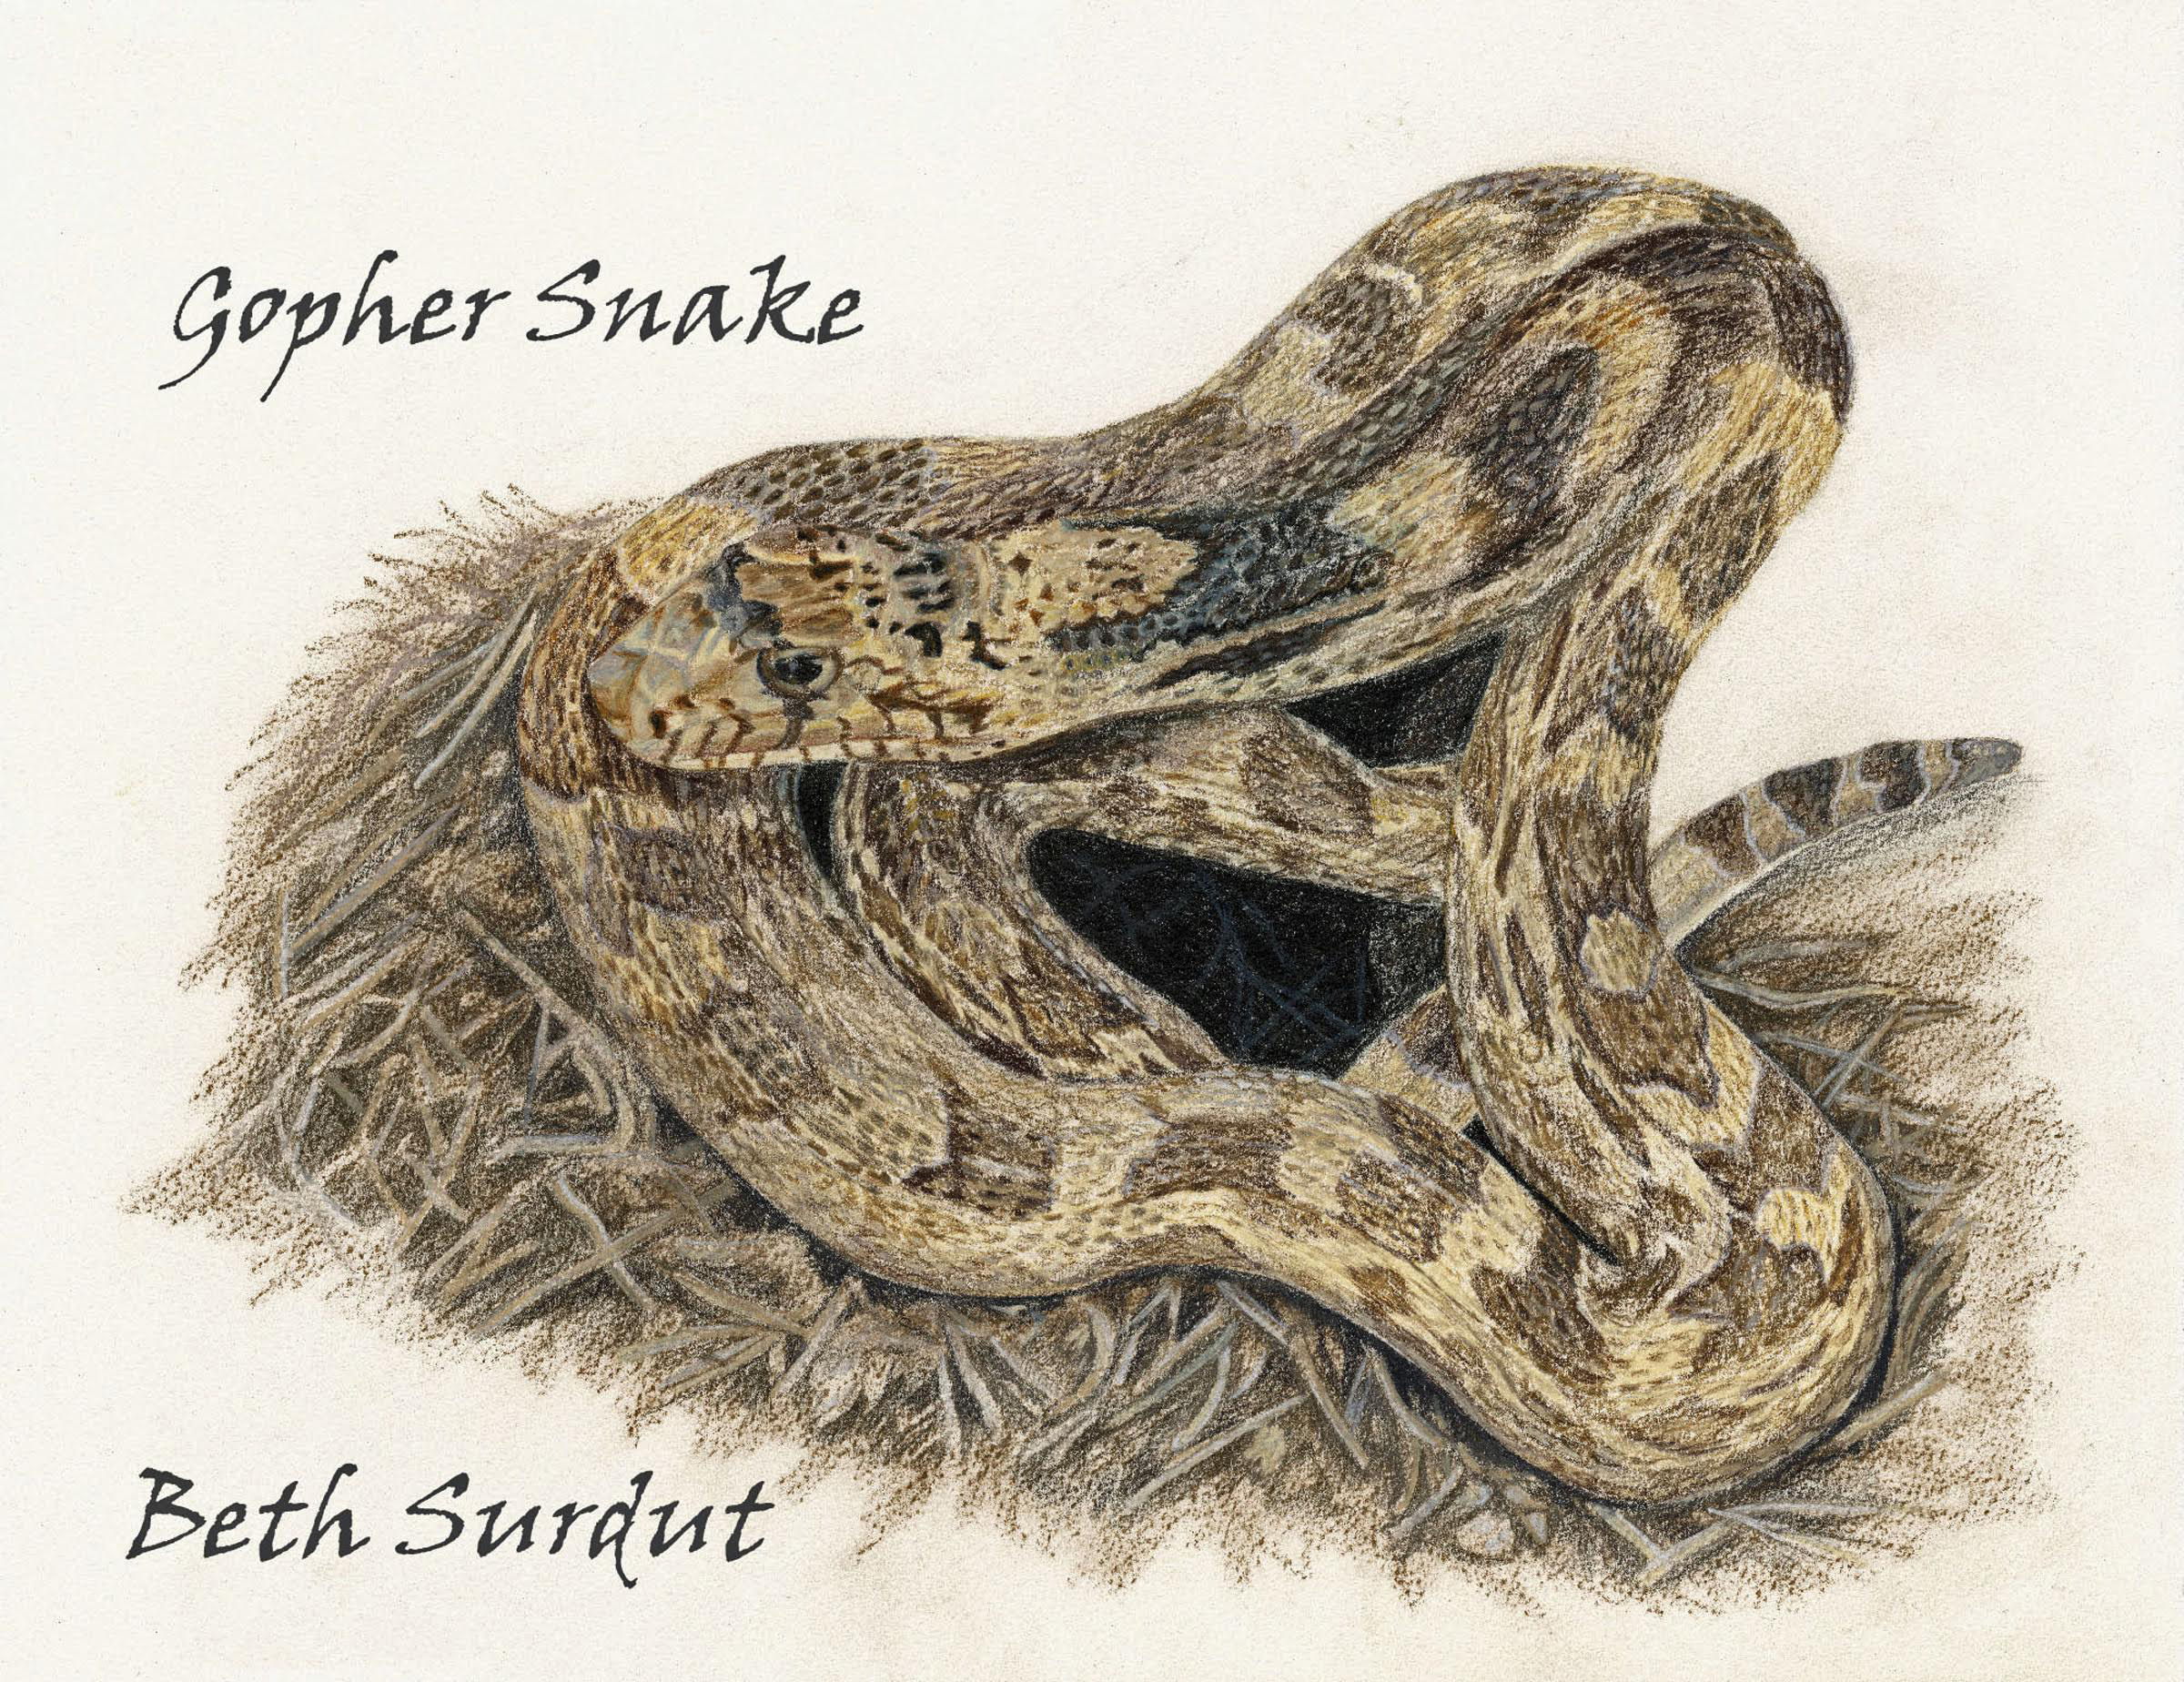 beth surdut snake drawing unsized image